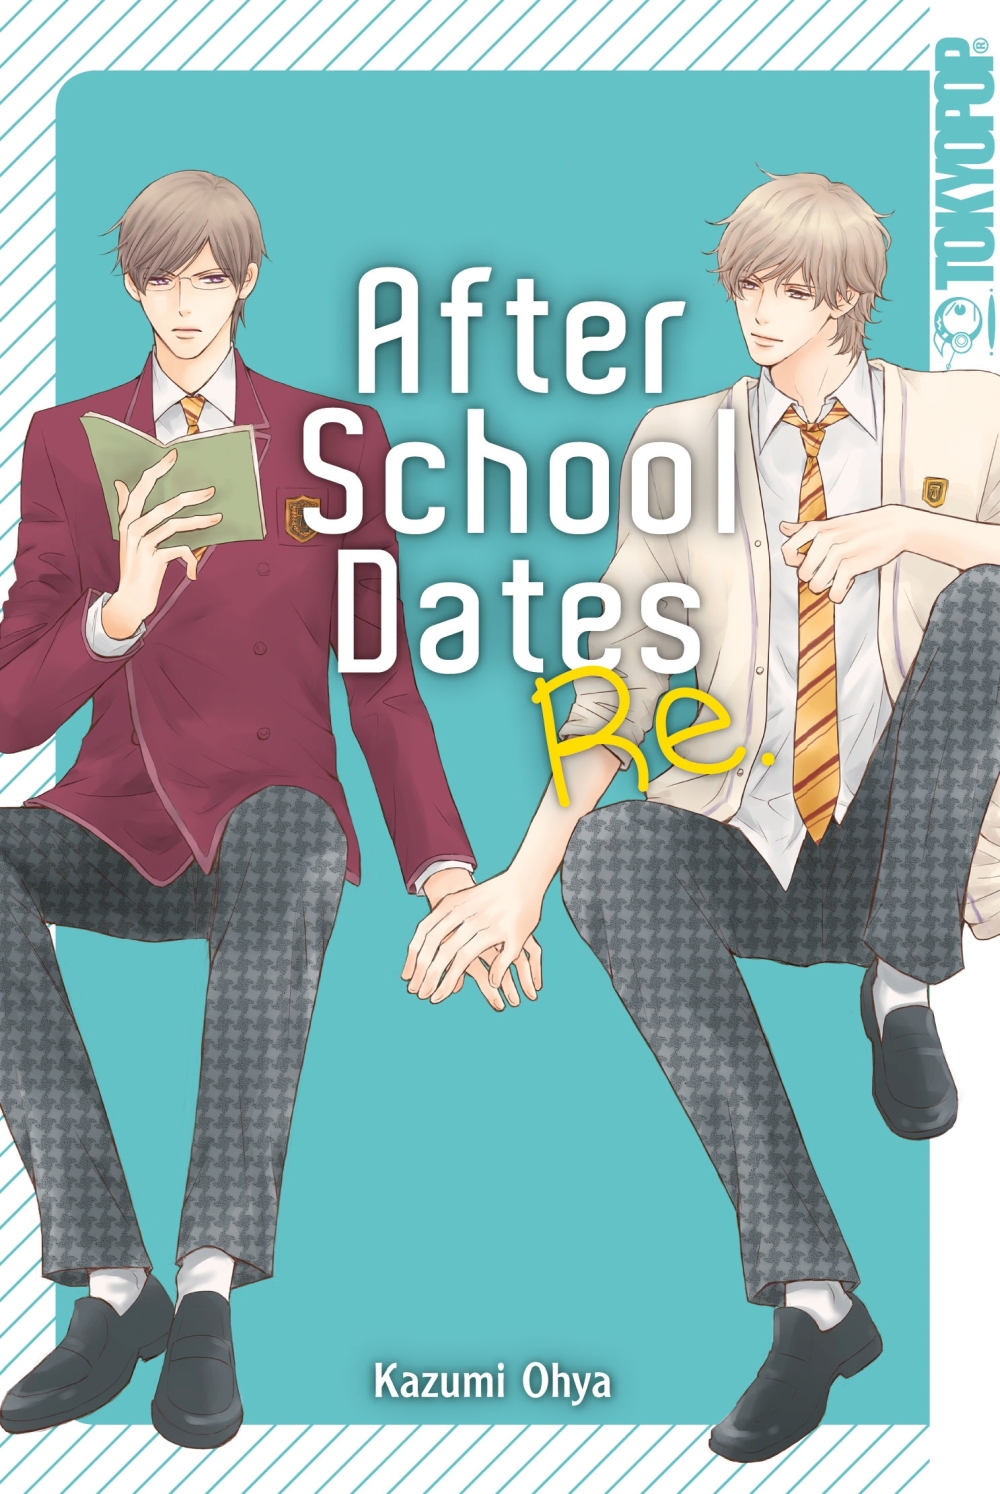 After School Dates Re. Manga (Neu)